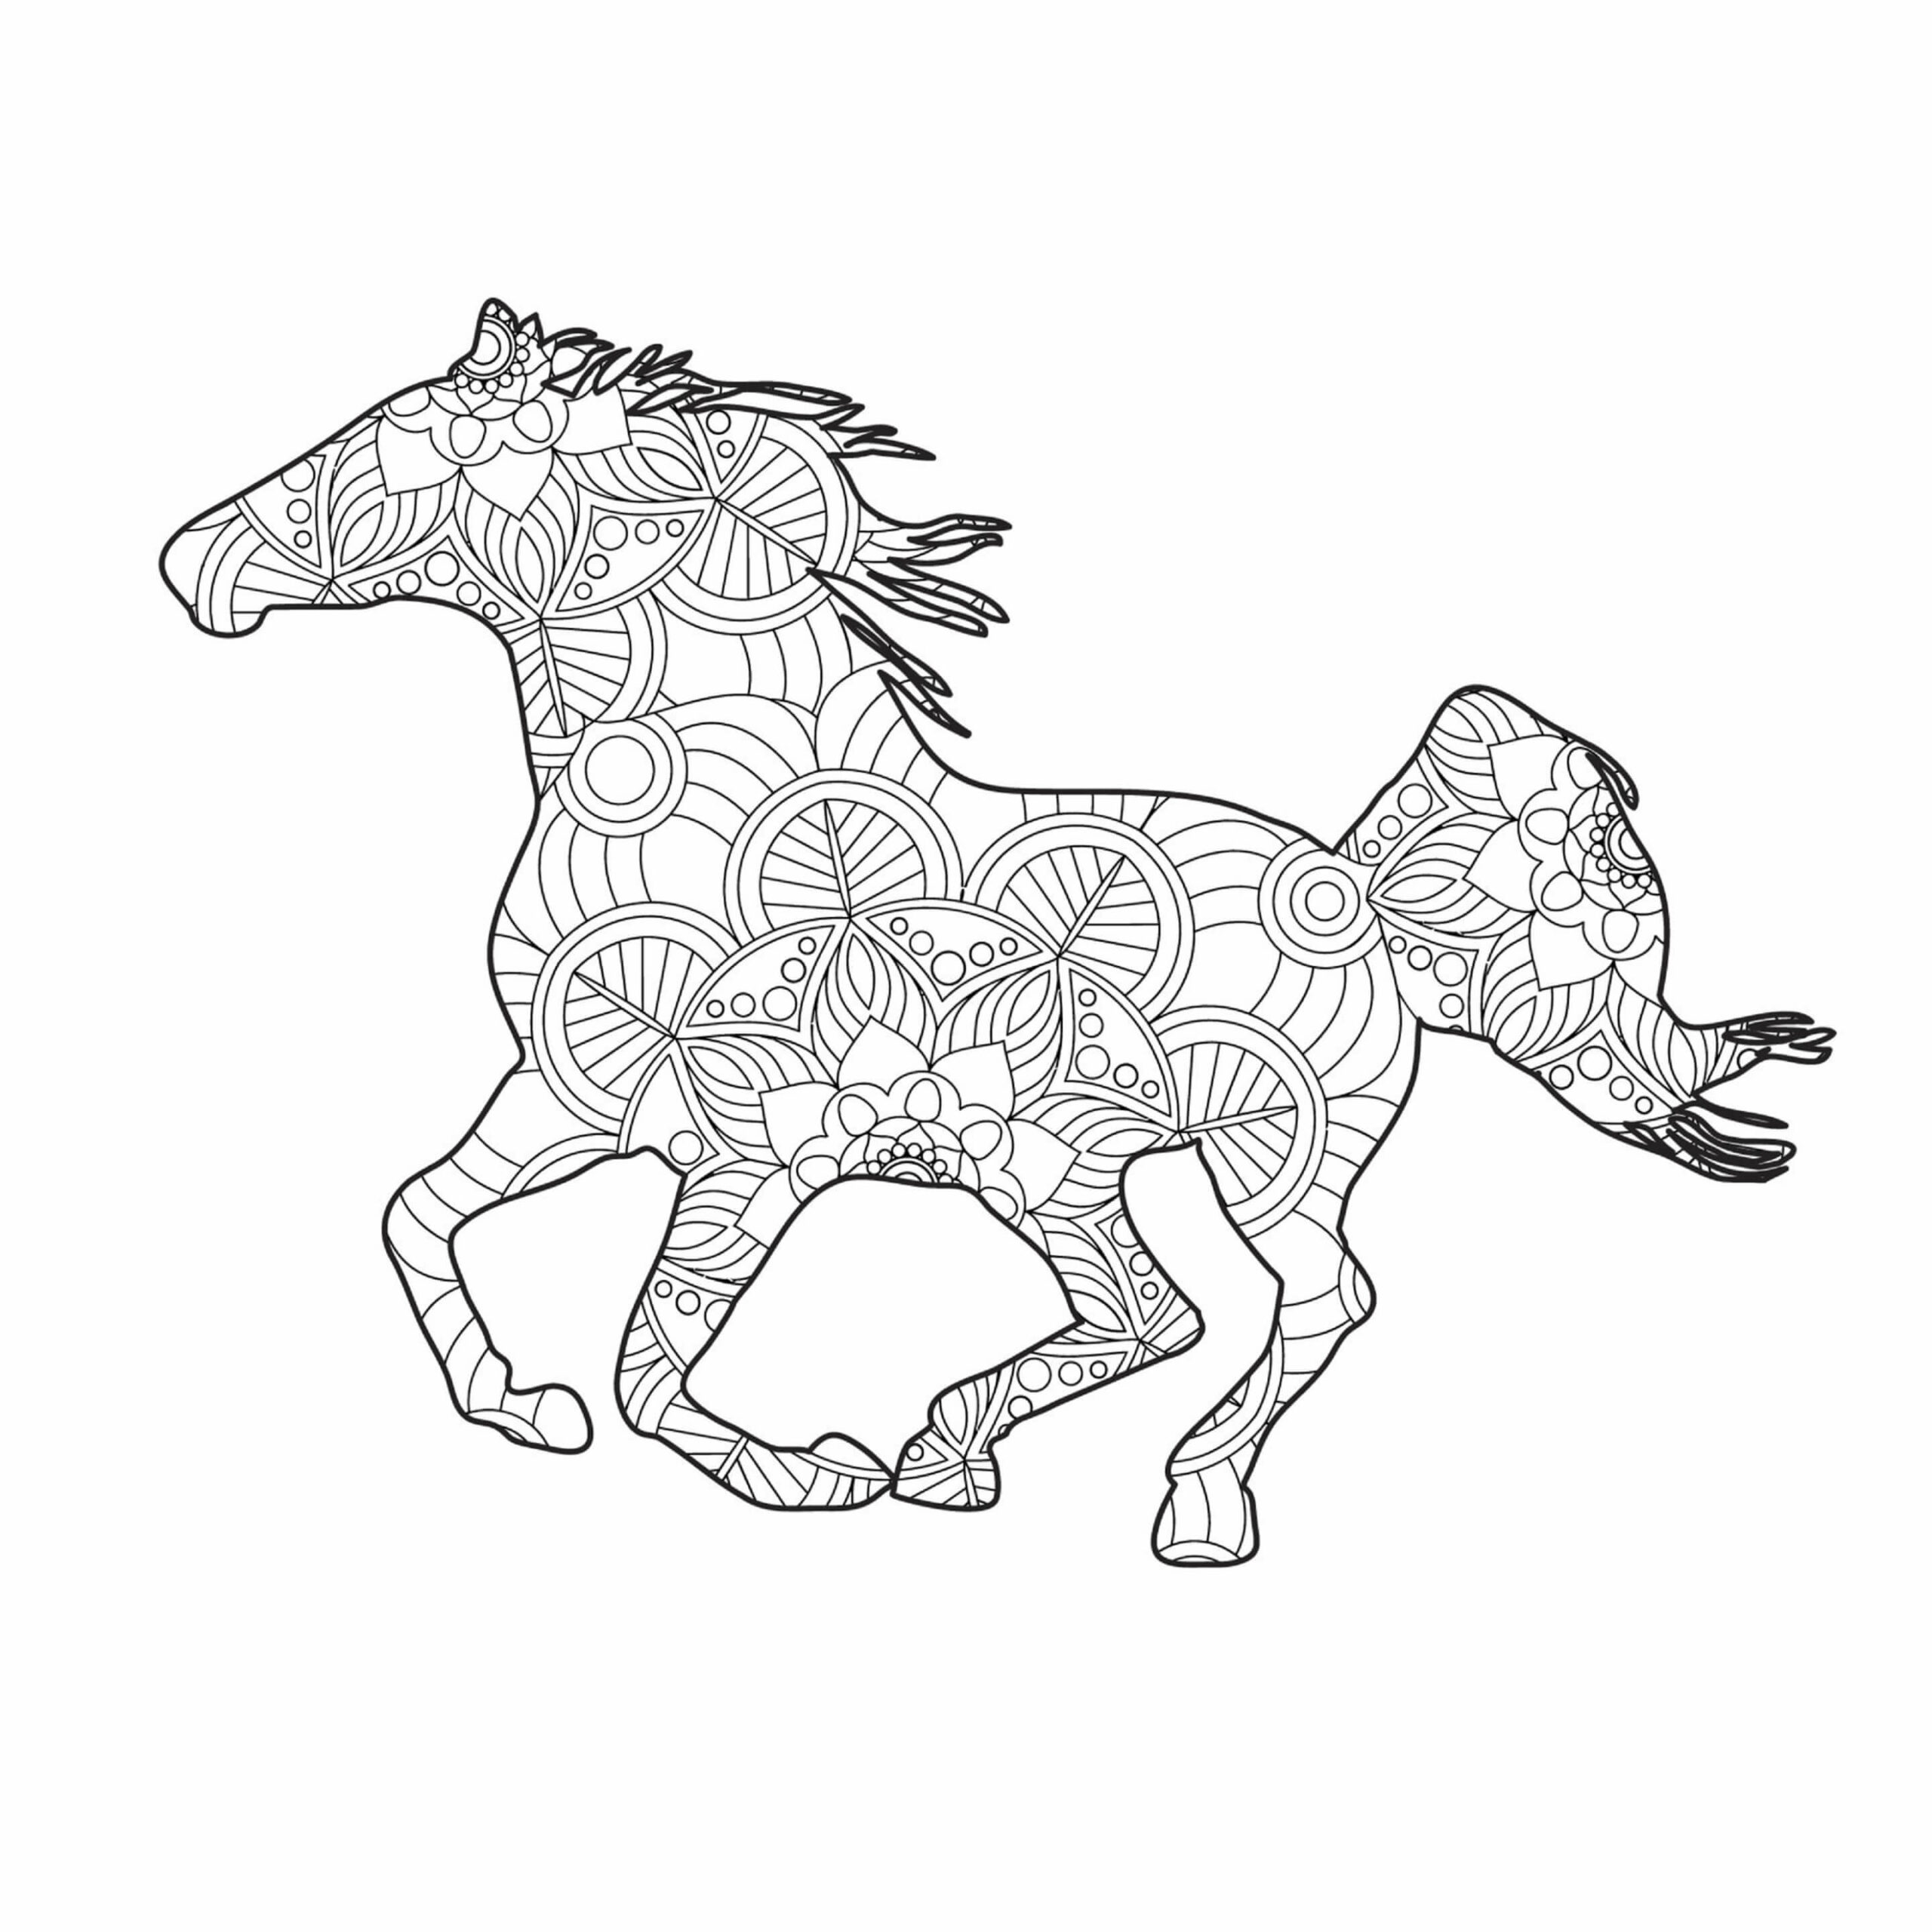 Mandala Horse Coloring Page - Sheet 11 Mandalas